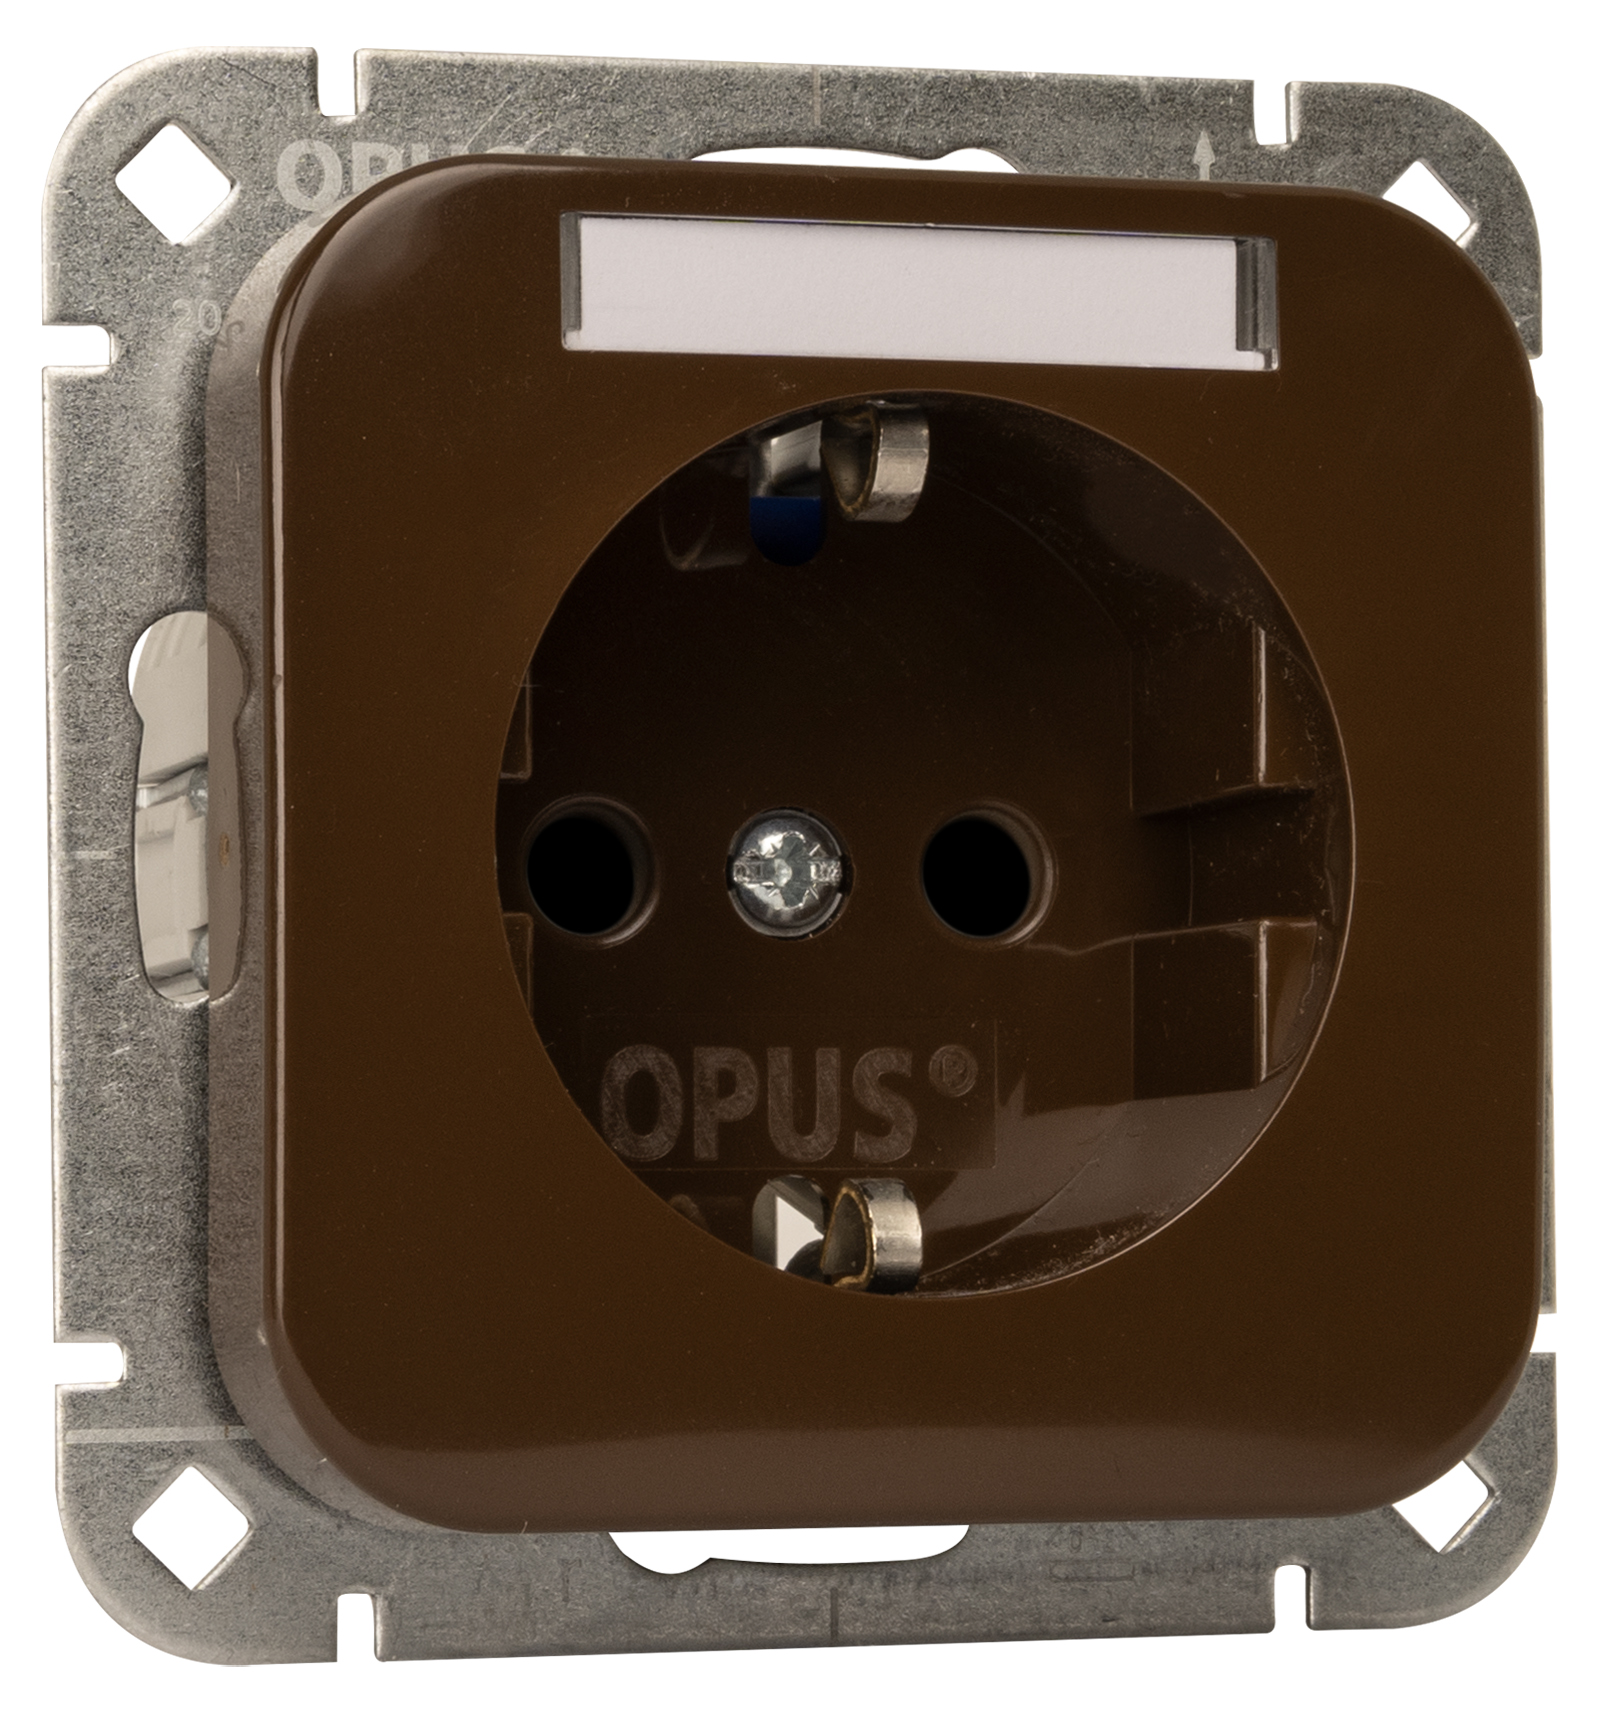 OPUS 1 Schutzkontakt-Steckdose mit Beschriftungsfeld